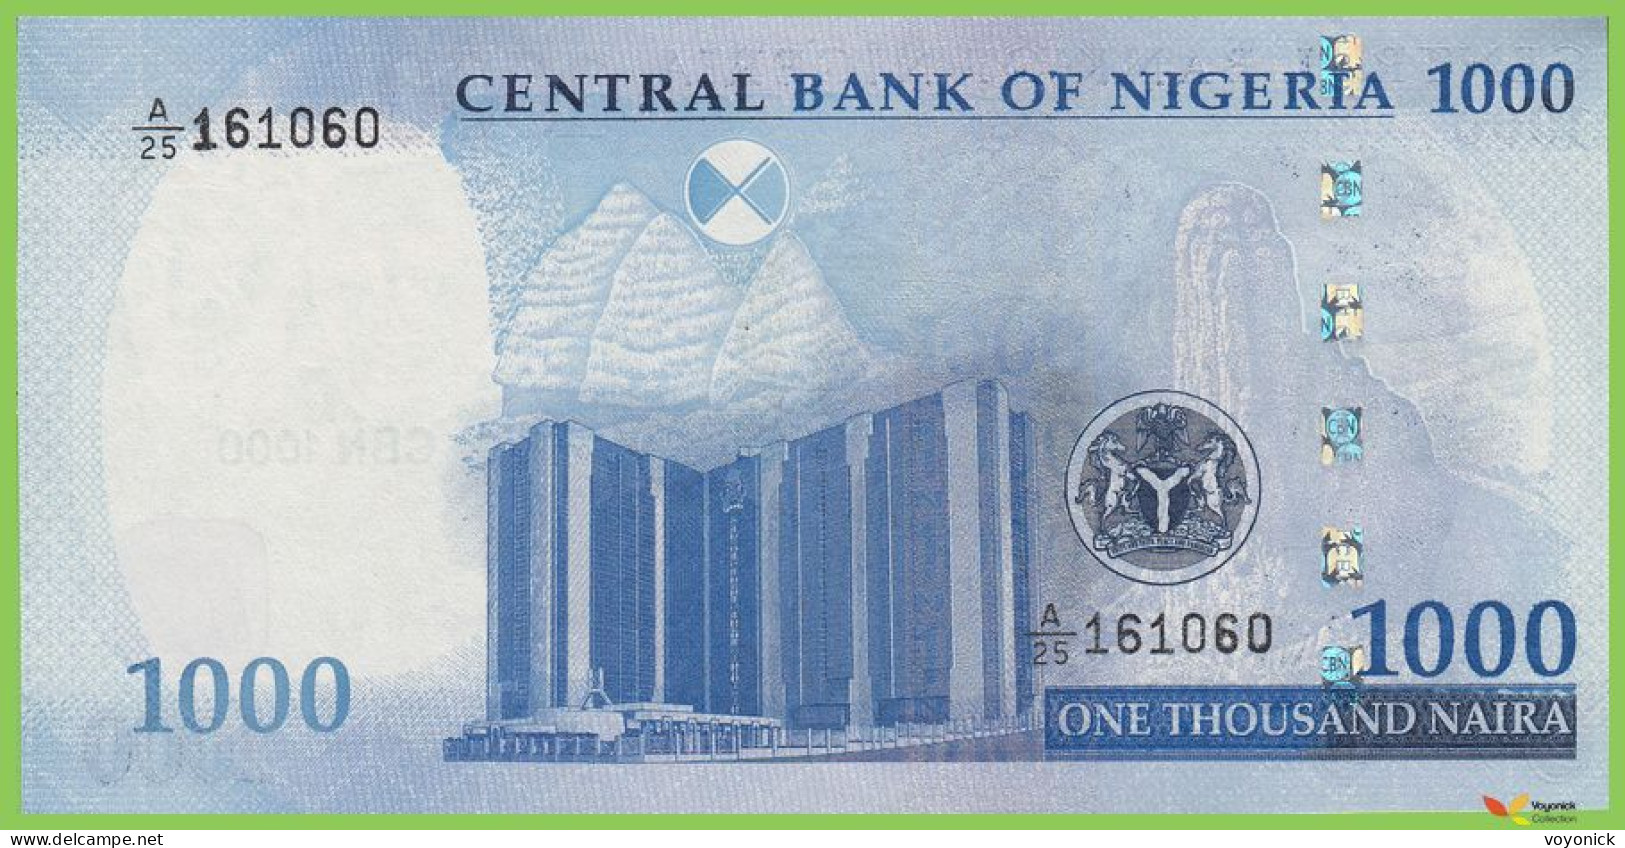 Voyo NIGERIA 1000 Naira 2022 P49 B246a A/25 UNC - Nigeria